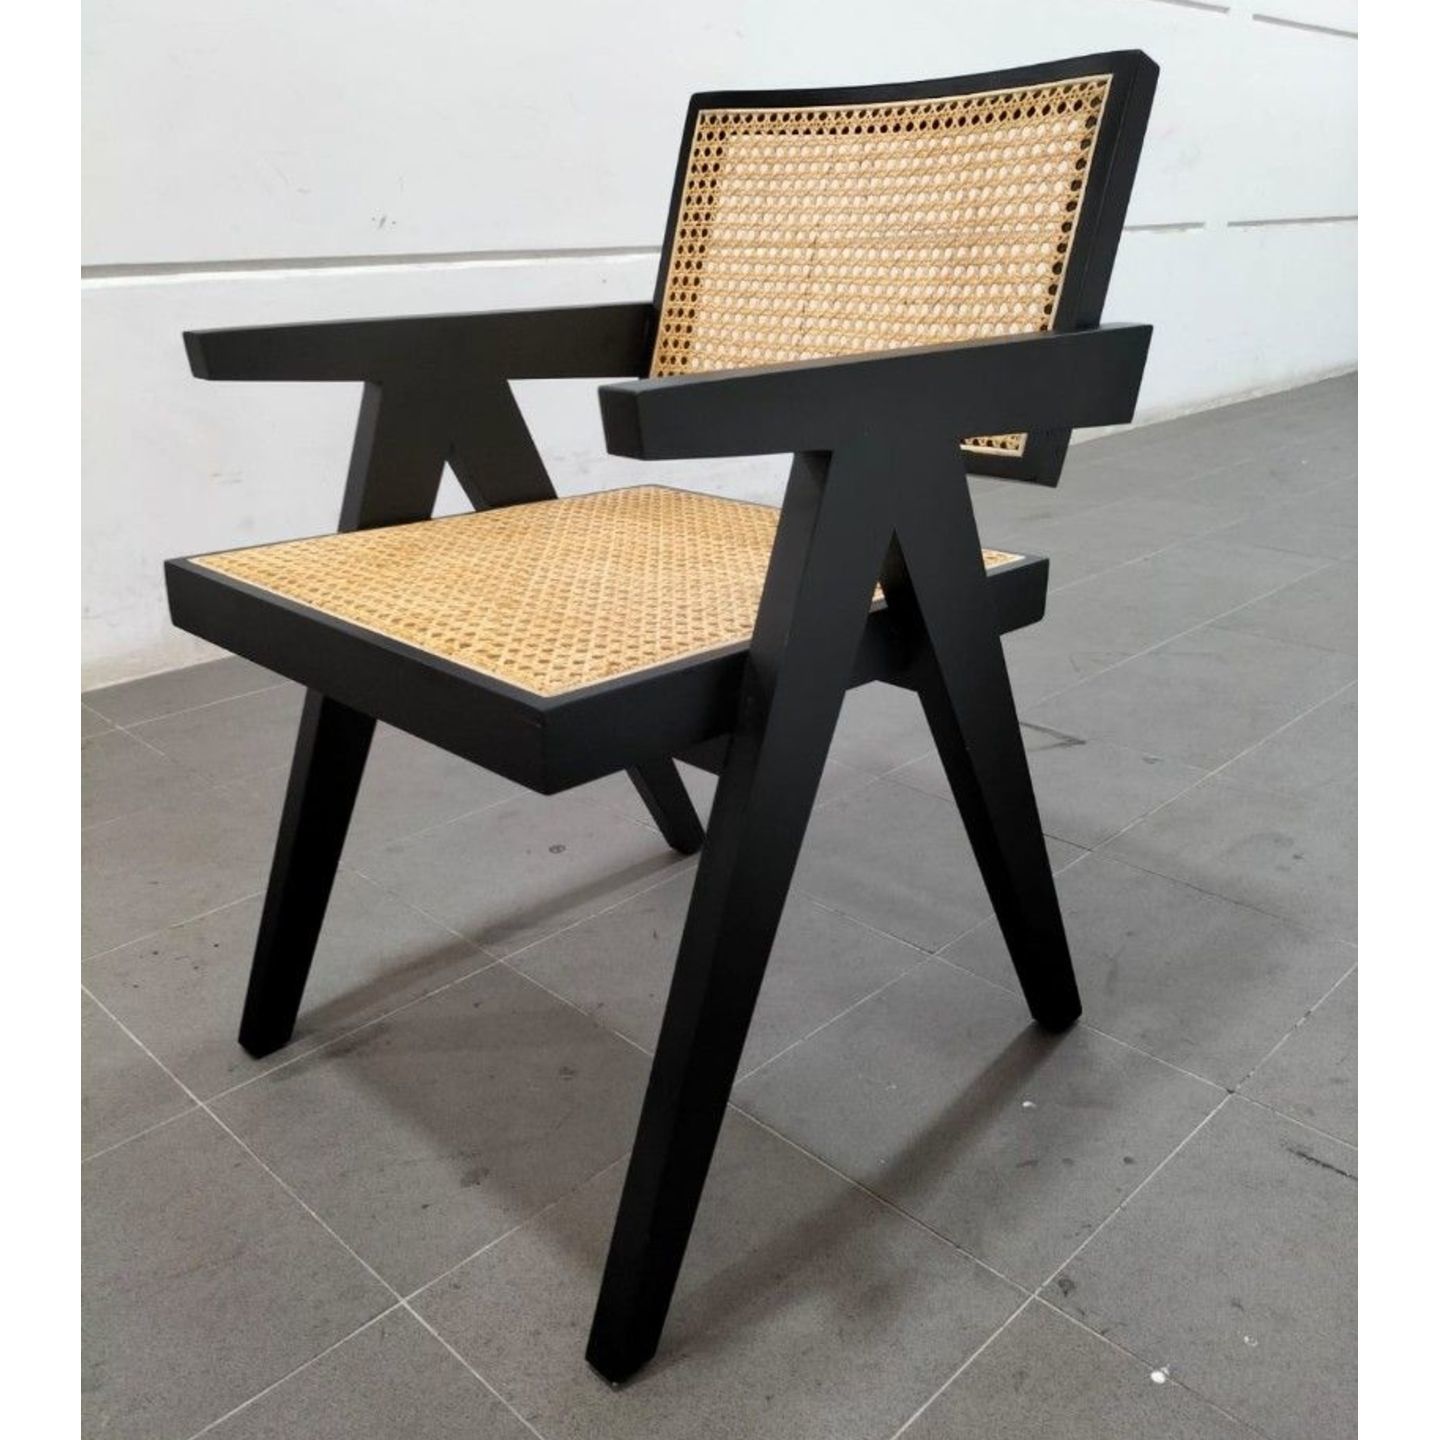 VOLONIA Rattan Chair in BLACK